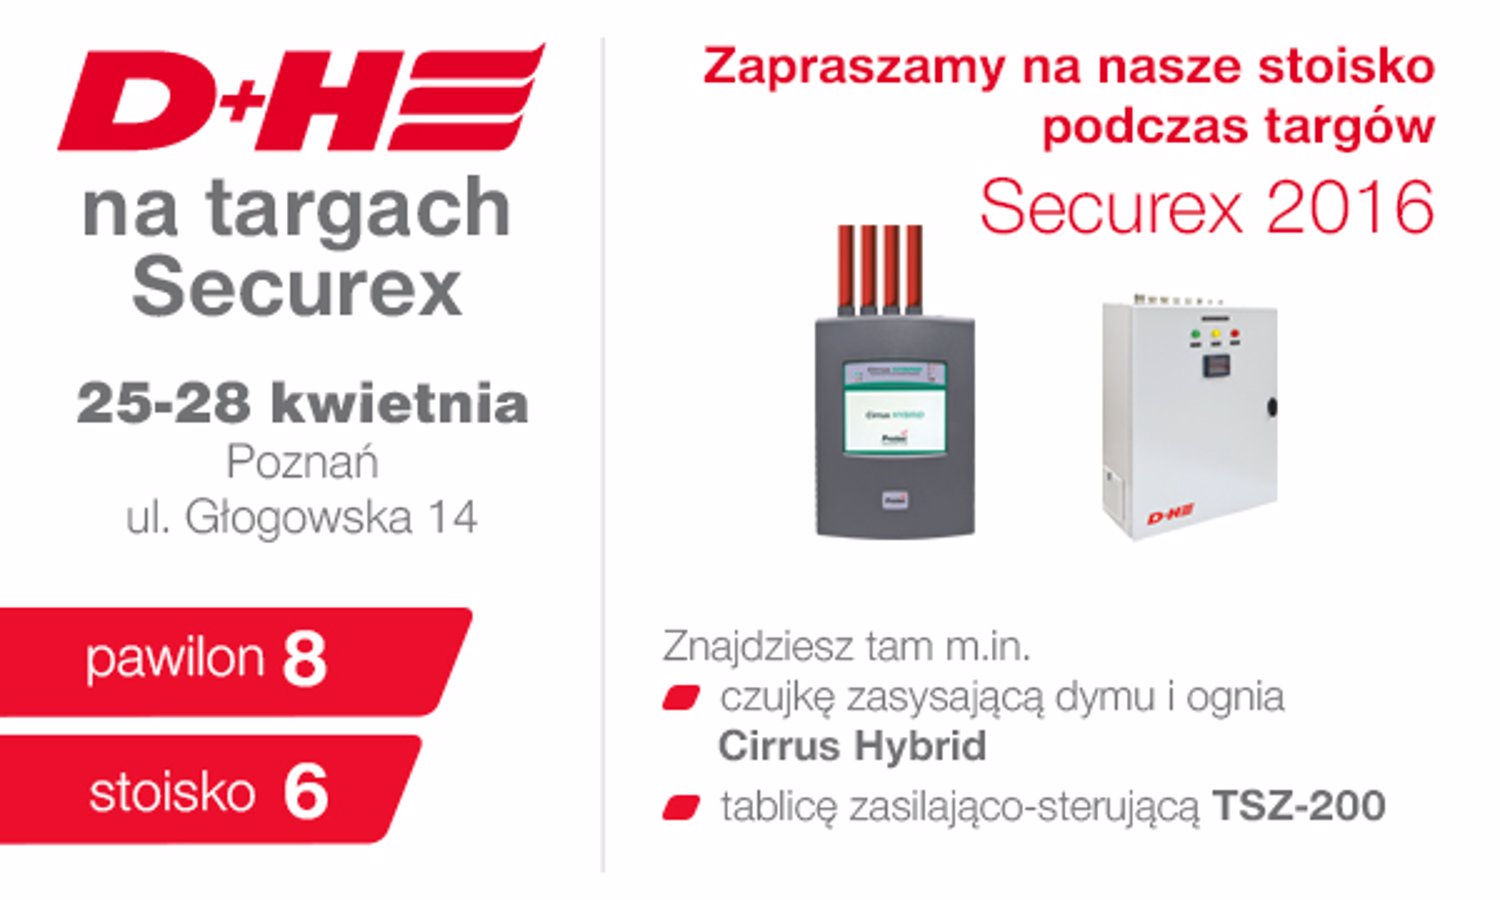 D+H Polska na targach Securex 2016